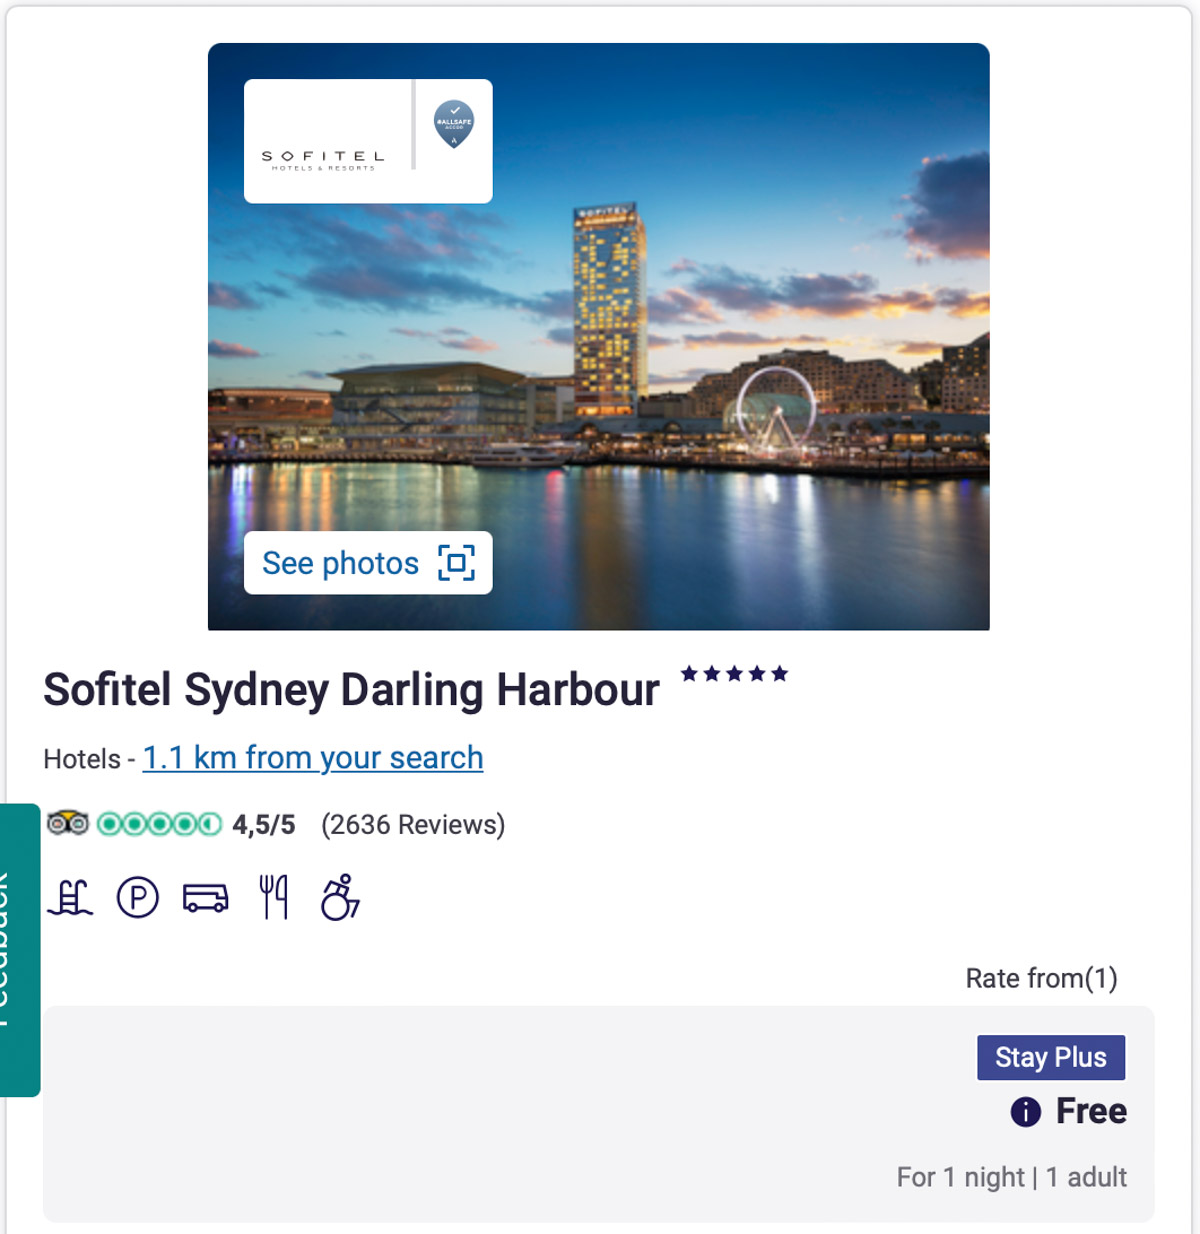 Accor Plus free hotel stay at Sofitel Sydney Darling Harbour 